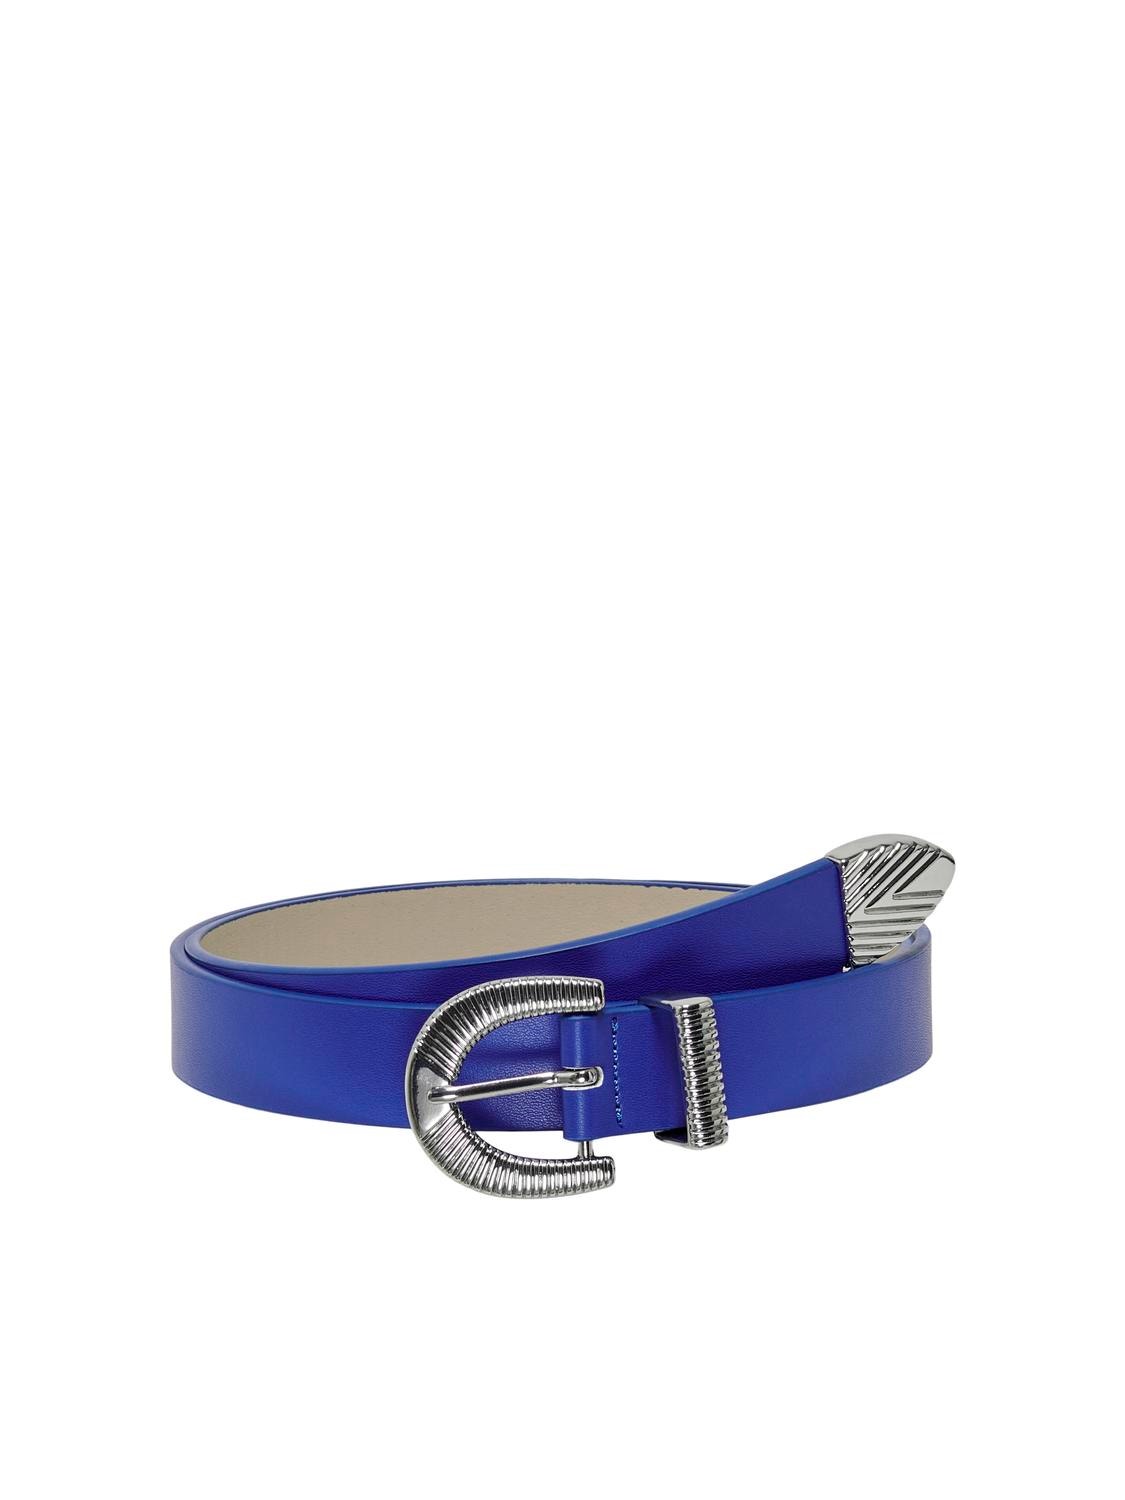 ONLY PU Belt -Dazzling Blue - 15291983